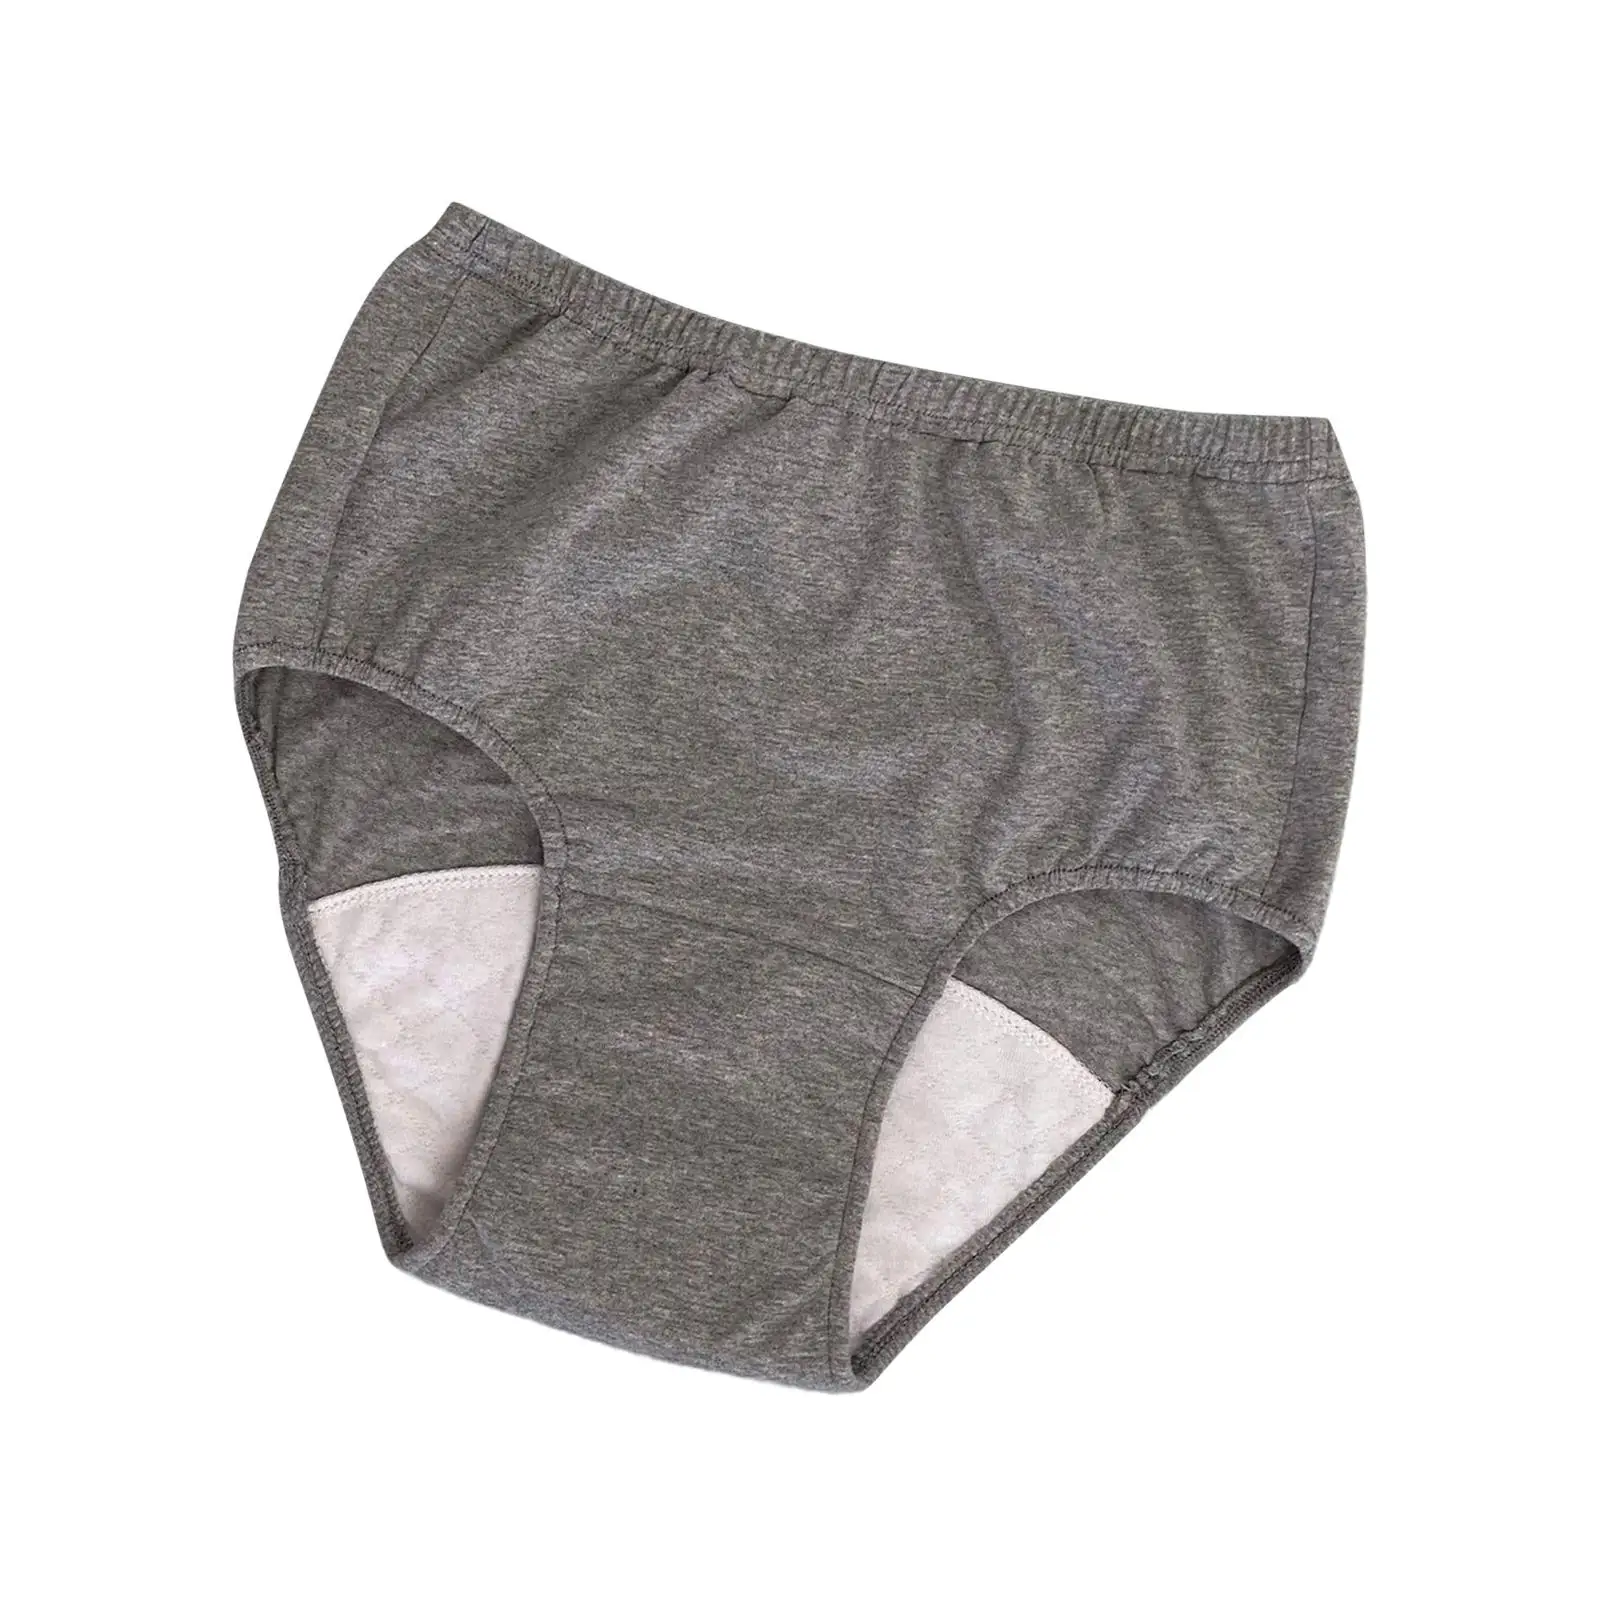 Elderly Diaper Reusable Underwear Nappy Incontinence Briefs for Elderly Seniors Men Women